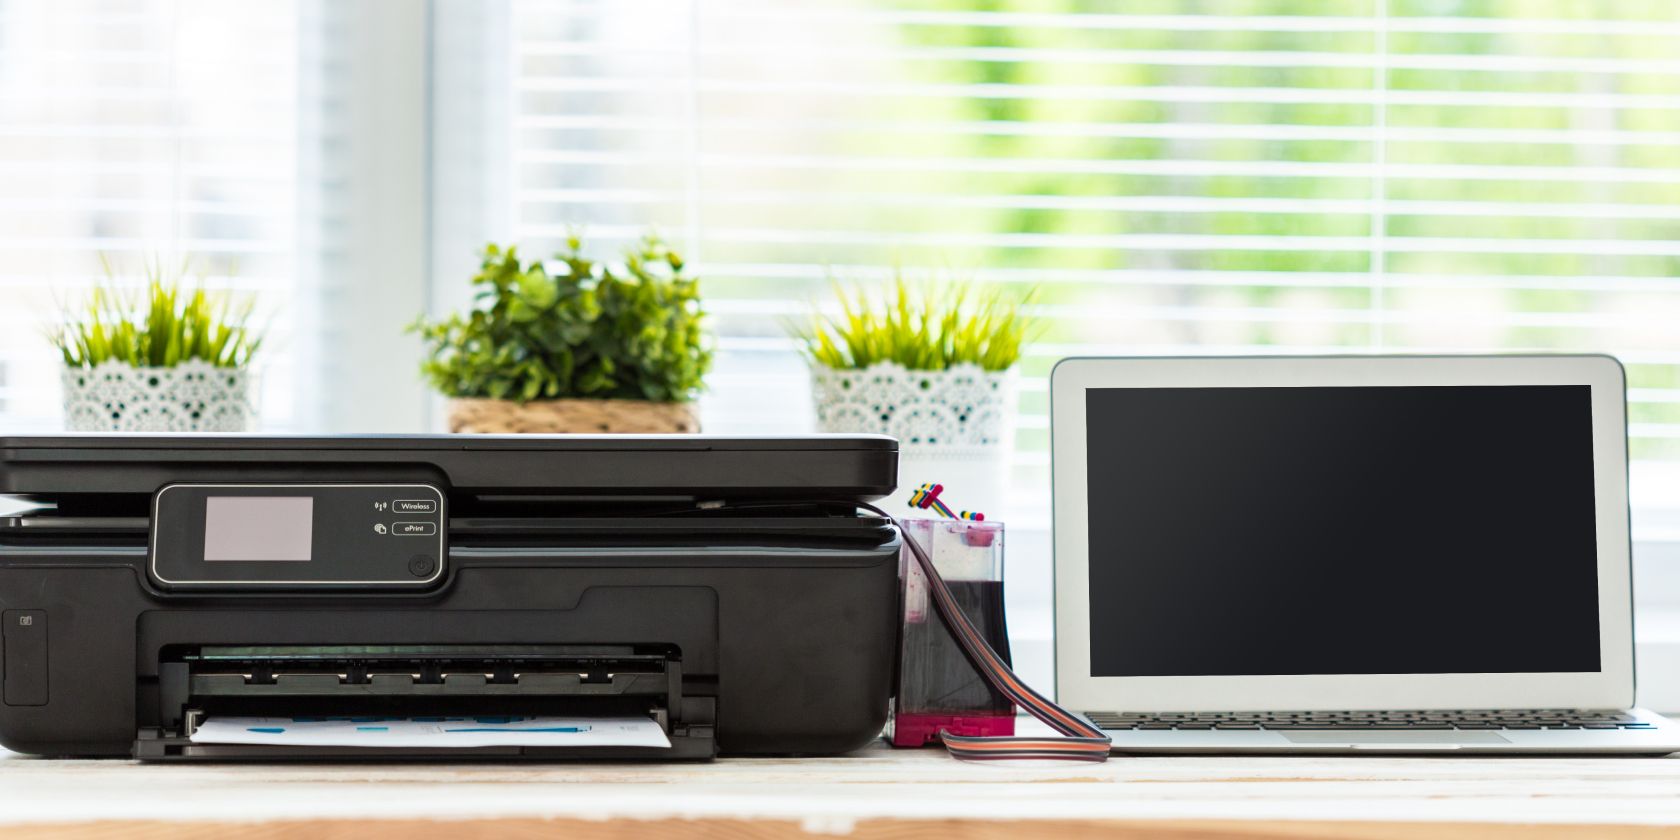 Black printer on desk next to MacBook Air laptop